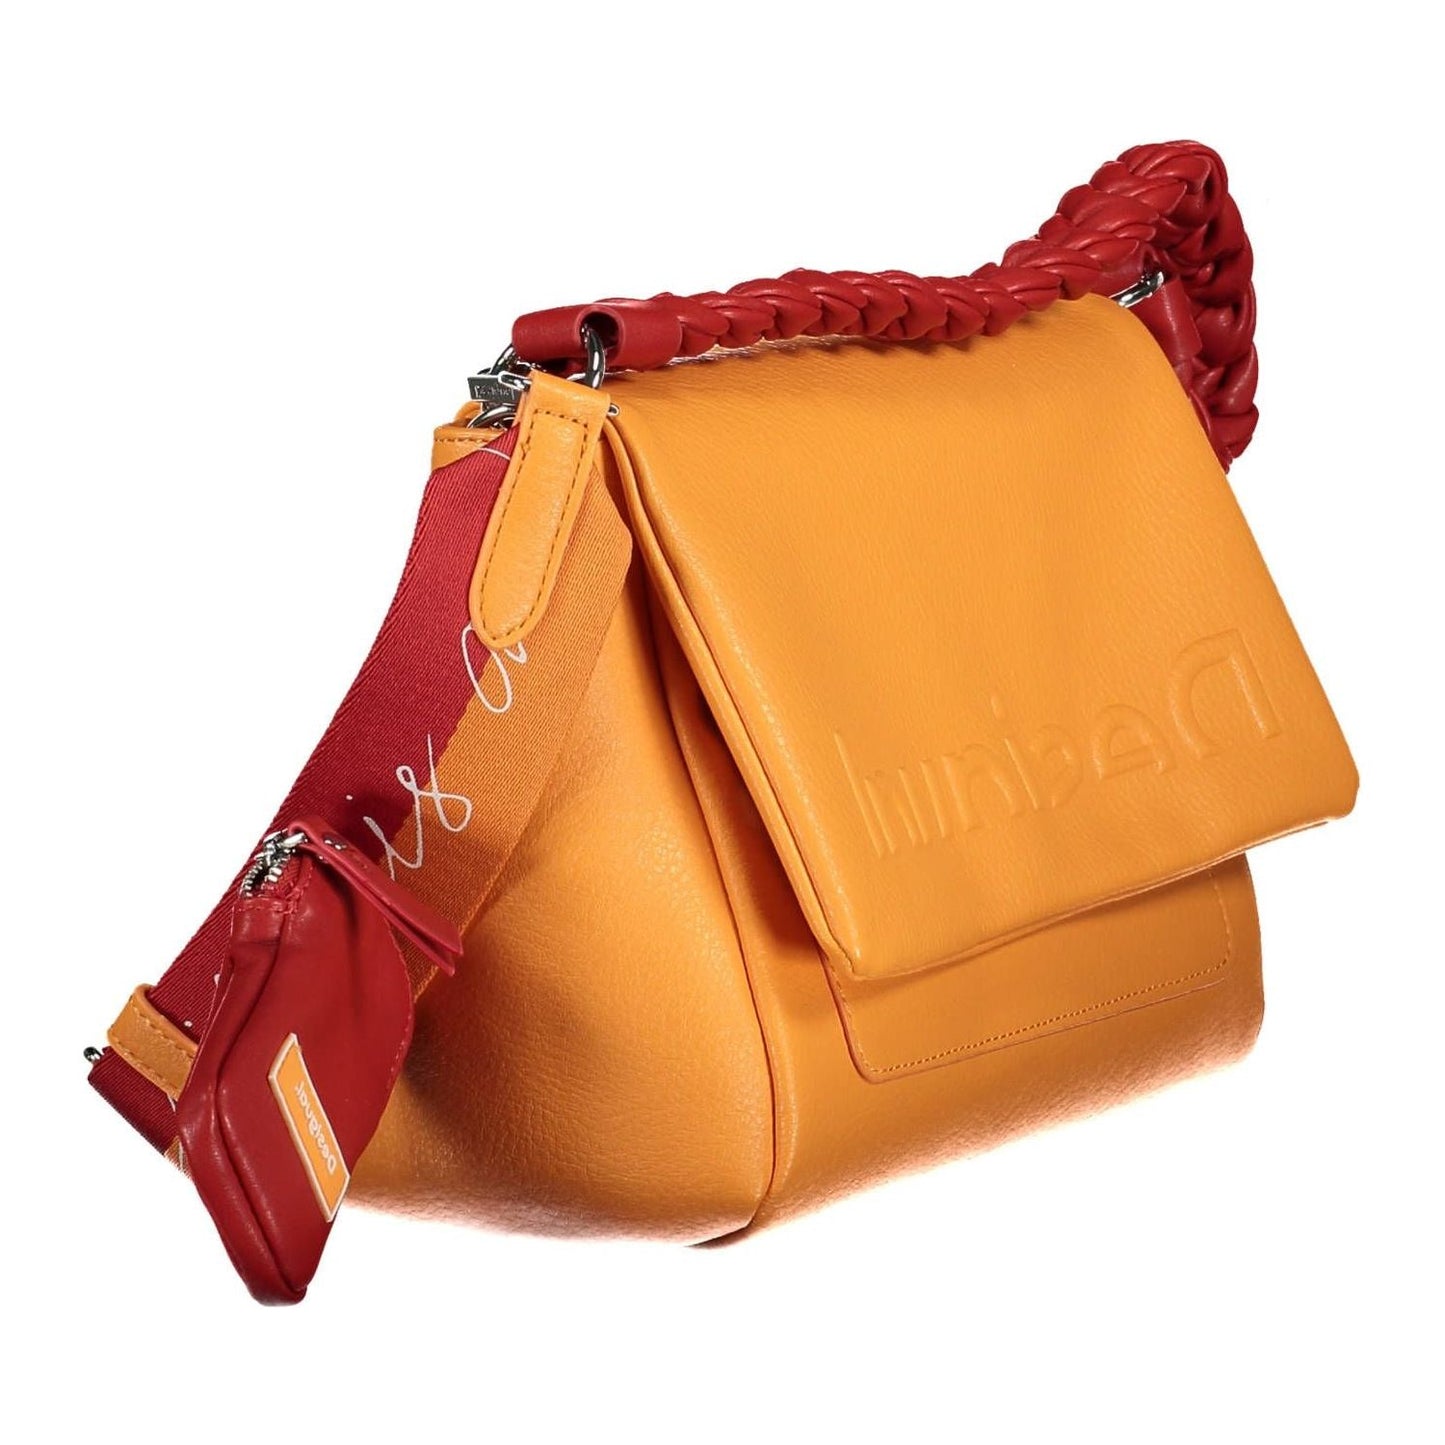 Desigual Chic Orange Shoulder Bag with Contrasting Details orange-polyurethane-shoulder-bag desigualborsadonnaarancio_3-3-8e36aa50-f1d.jpg